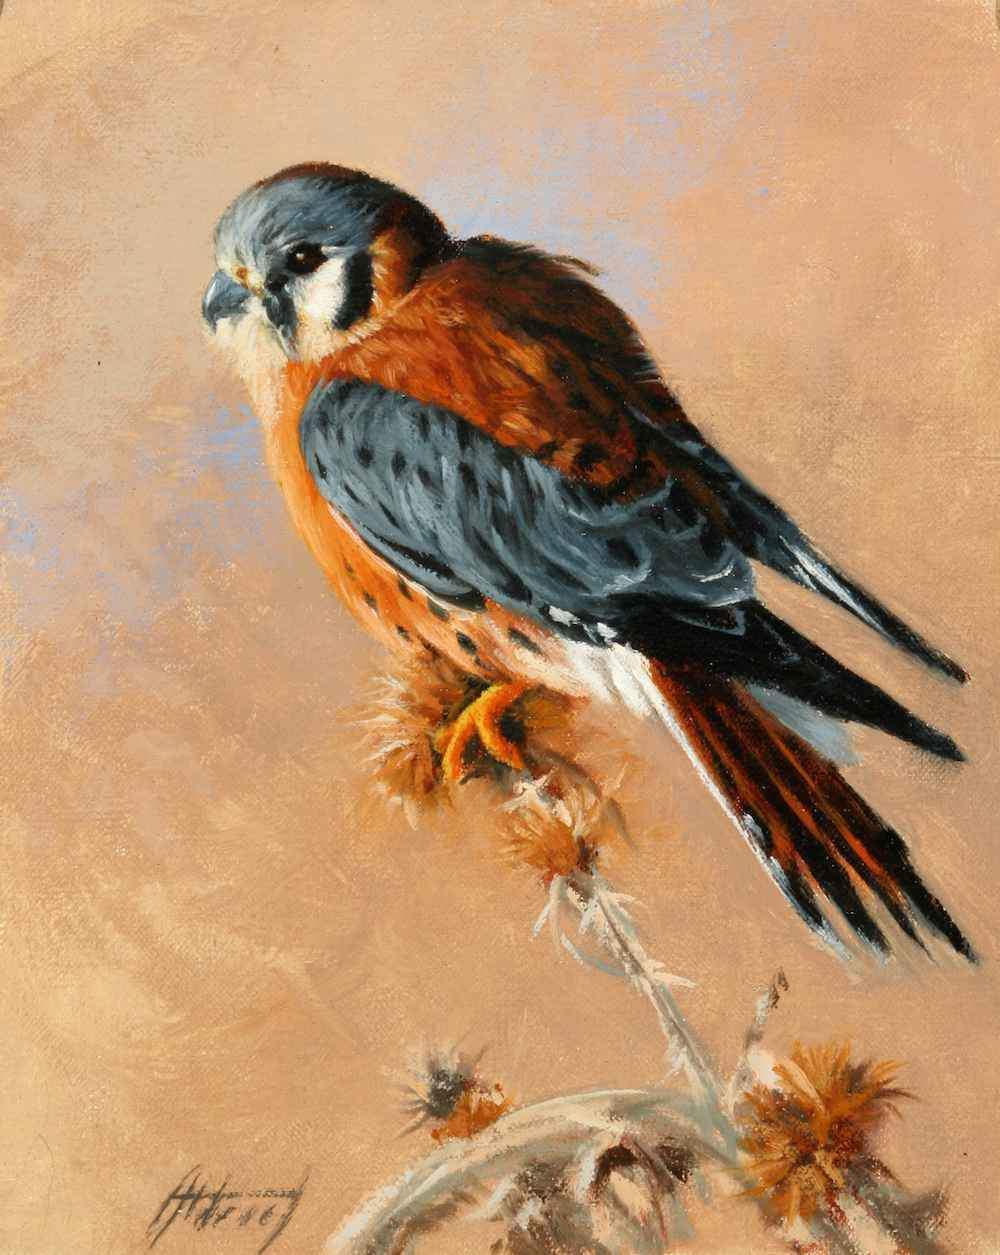 Edward Aldrich-Kestrel-Sorrel Sky Gallery-Painting